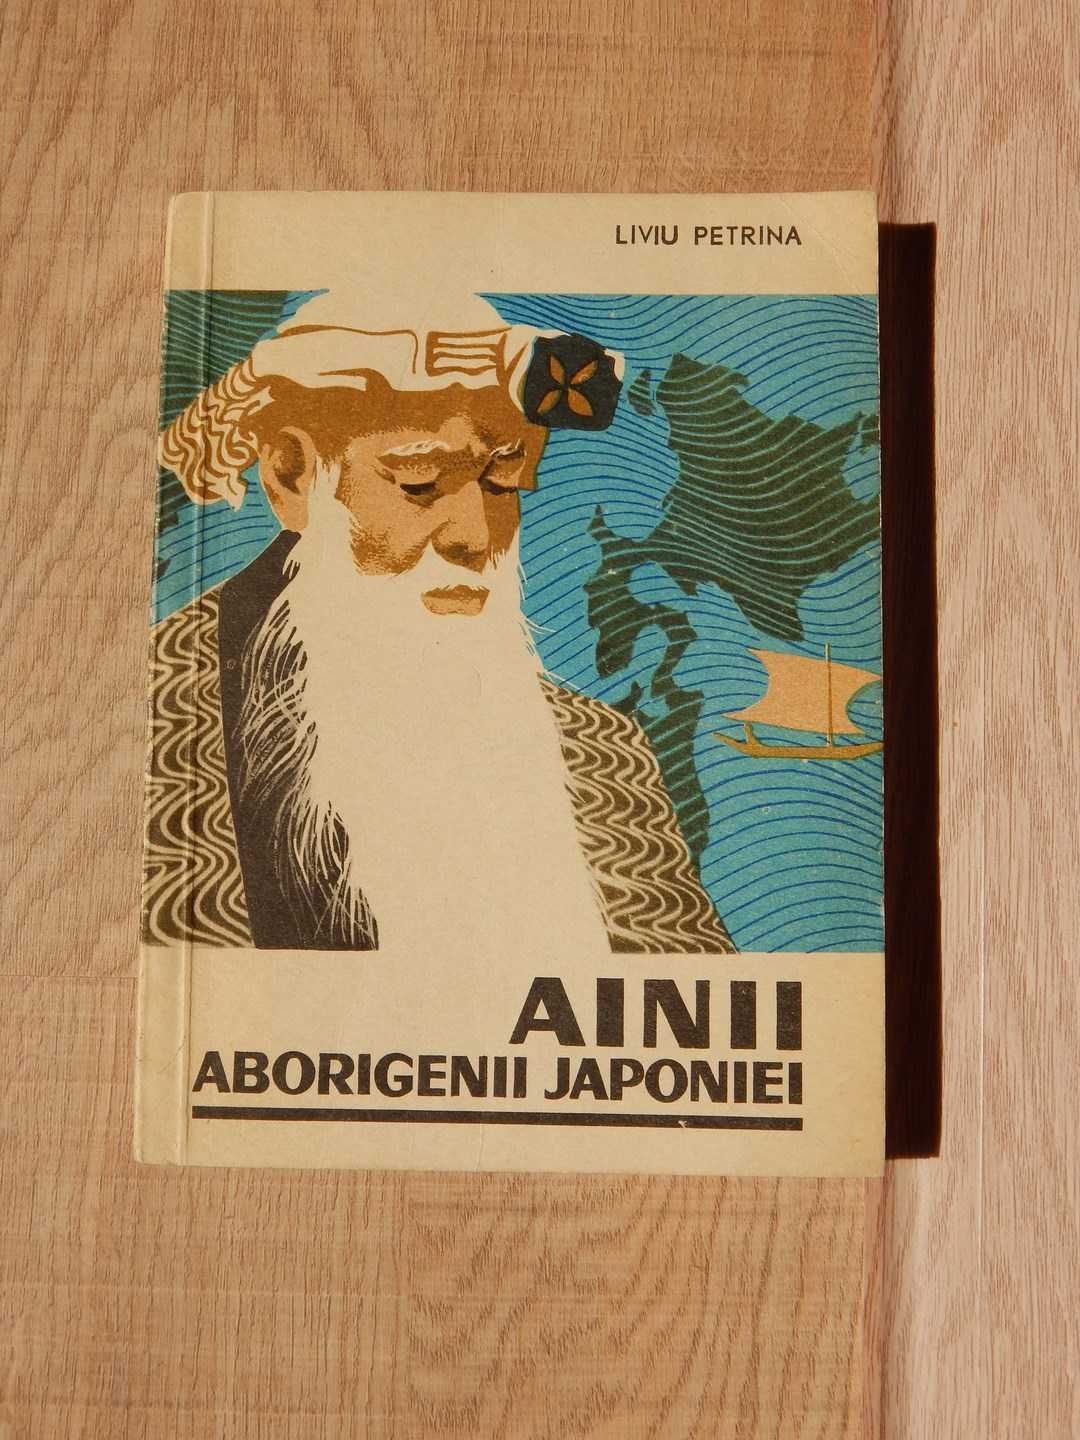 Ainii aborigenii Japoniei Liviu Petrina ed Albatros 1970